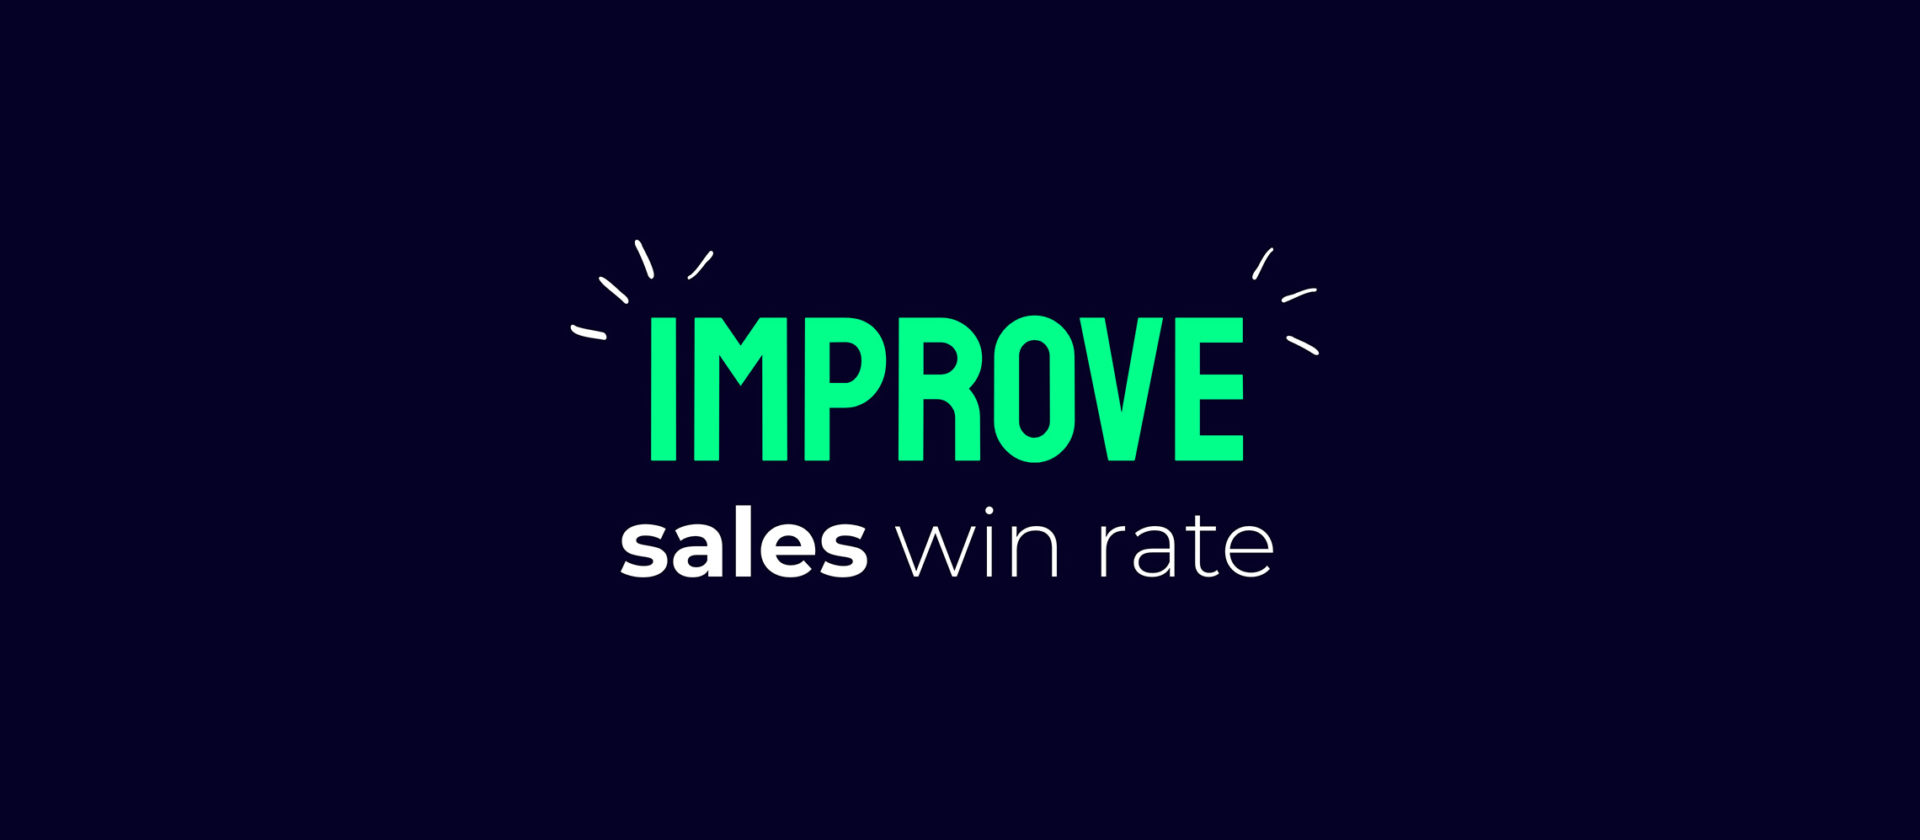 Improve sales win rate: eight simple ideas.